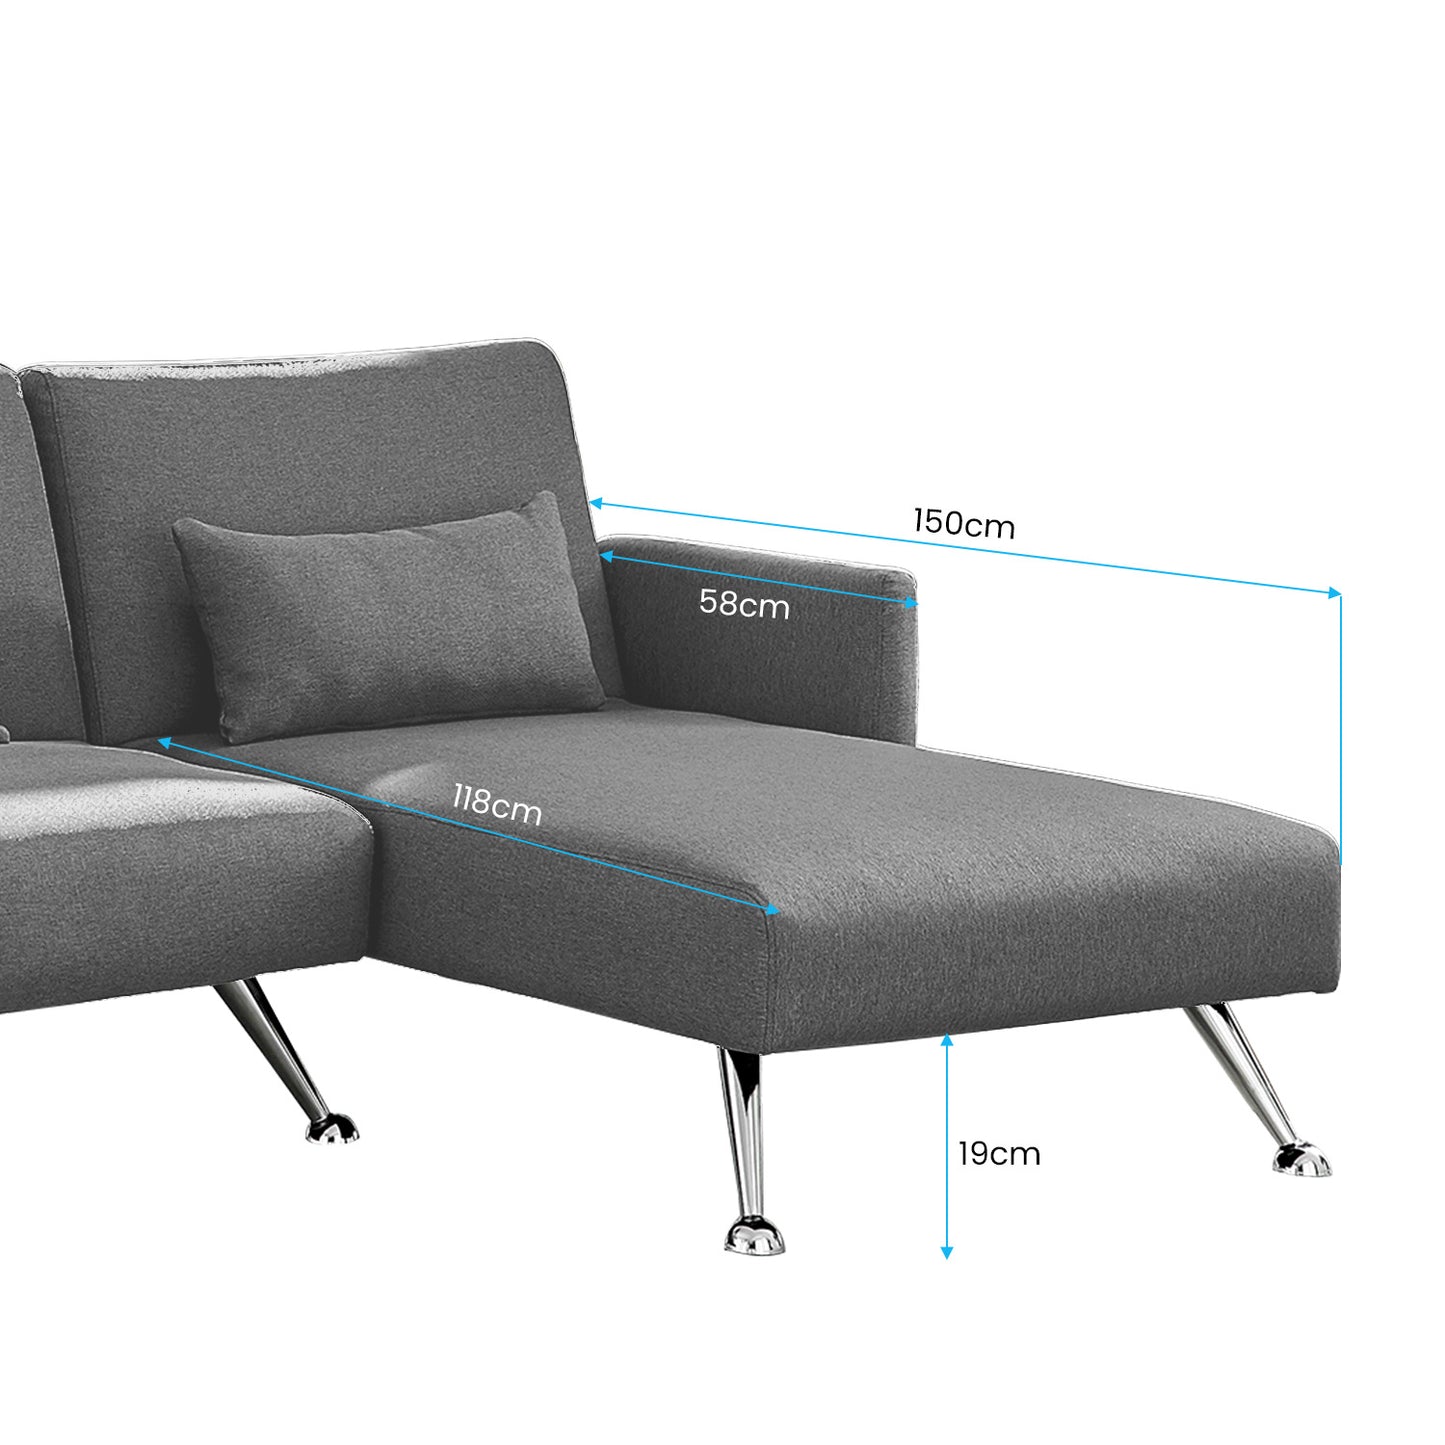 Merritt 3-Seater Chaise Sofa Bed with 3 Pillows - Dark Grey